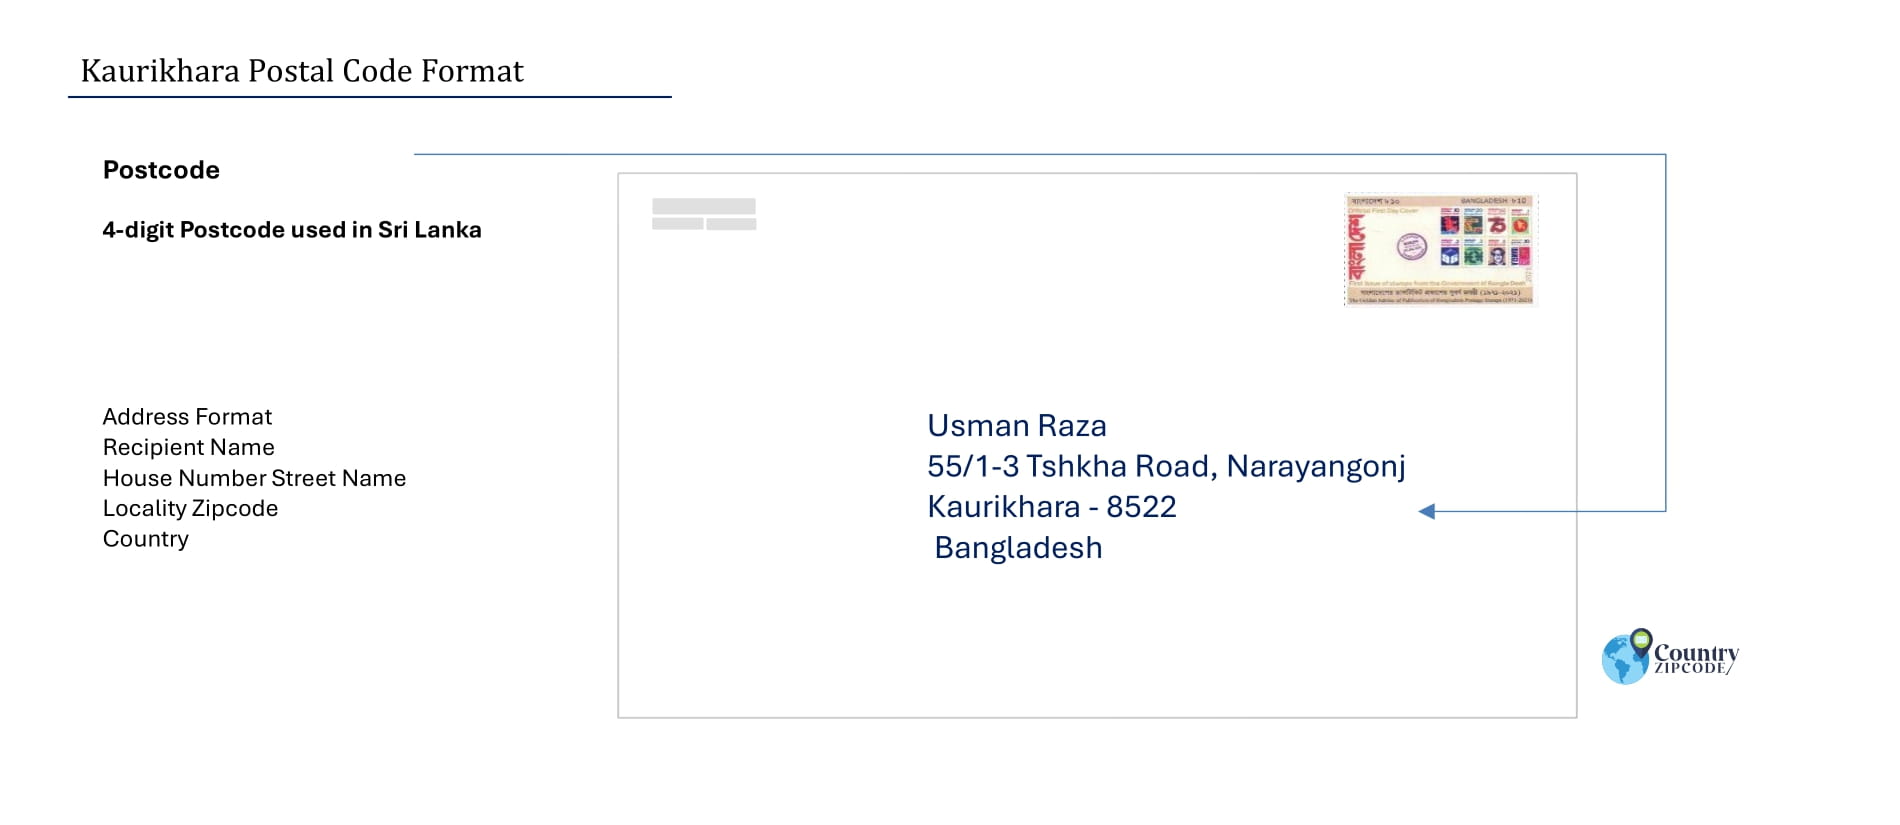 Kaurikhara Postal code format